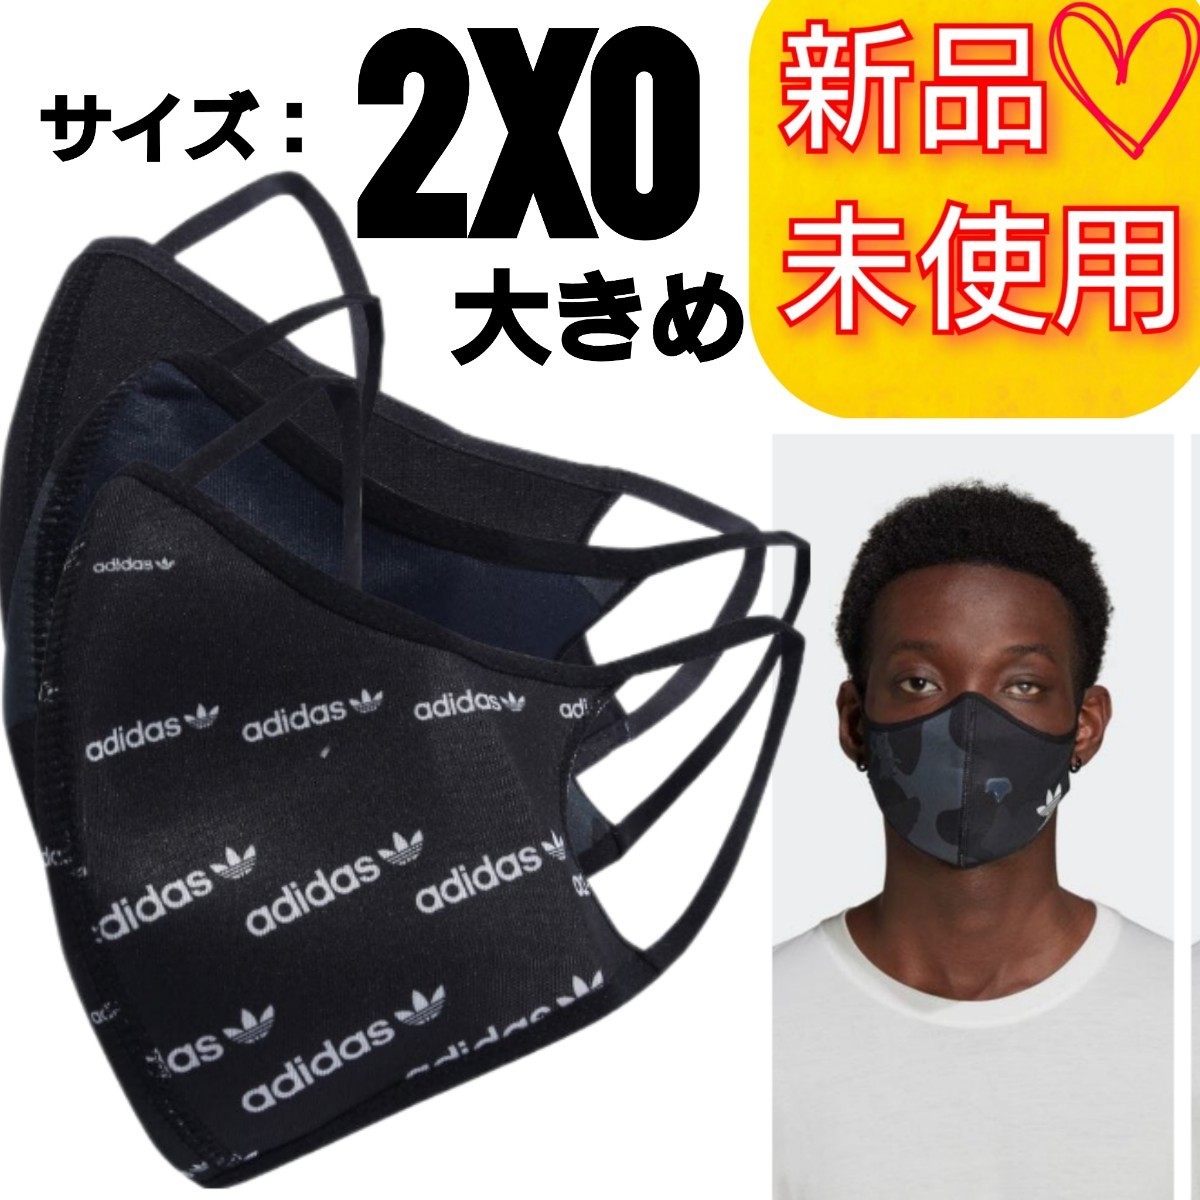 【2XO】アディダスオリジナルス フェイスカバー 3枚組 新品未使用 フェイスマスク マスク 男女兼用 完売品_画像1